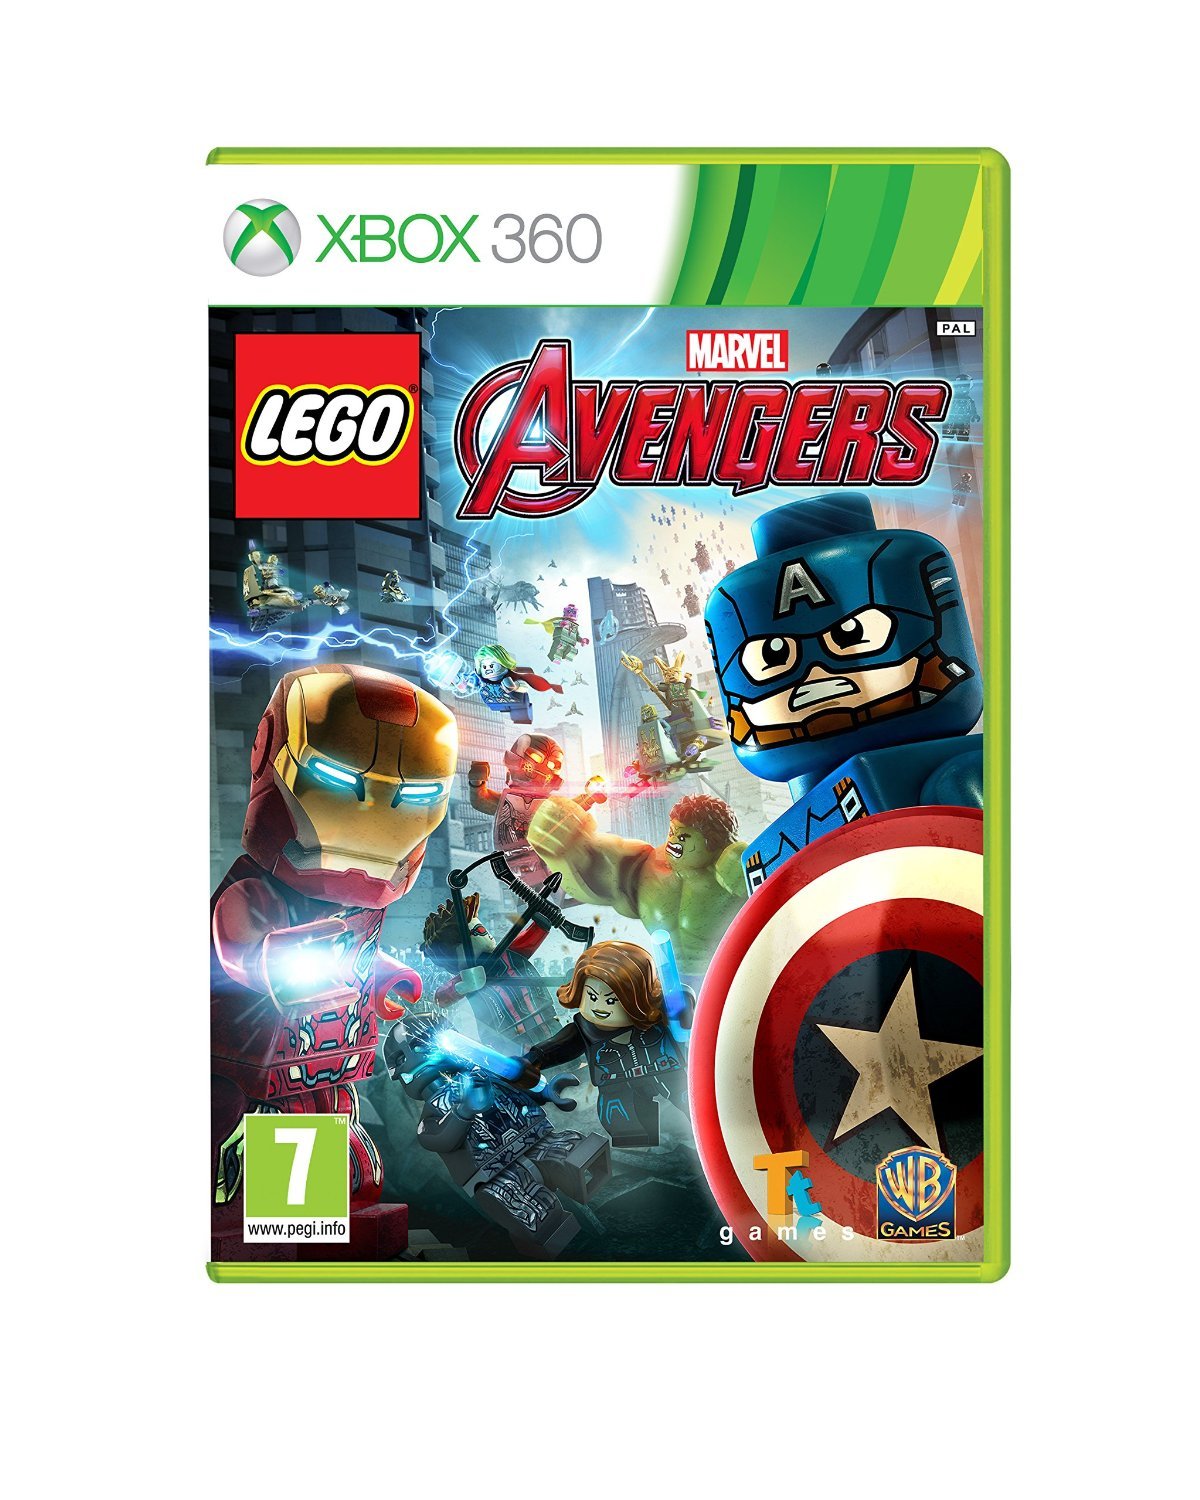 free download lego marvel avengers xbox one